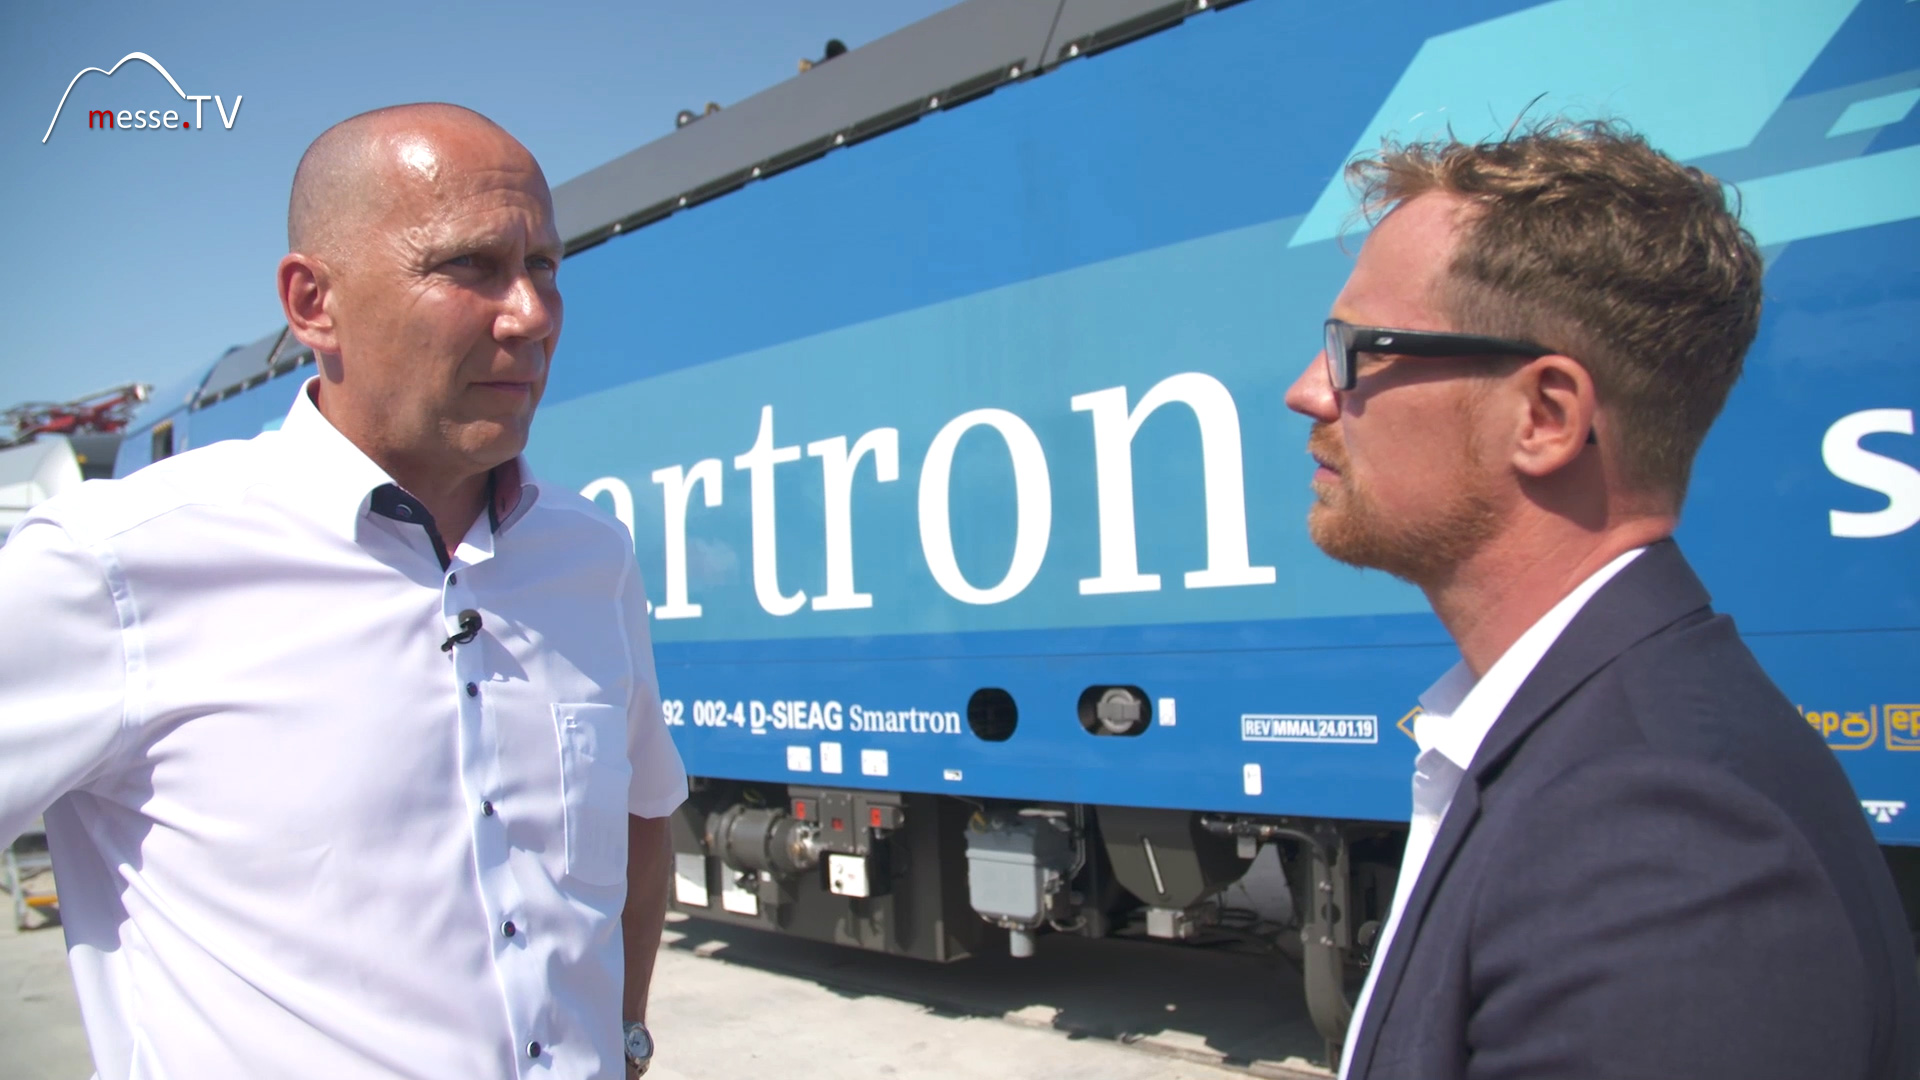 MesseTV Interview Siemens Smartron Locomotive for only 25 million Euros